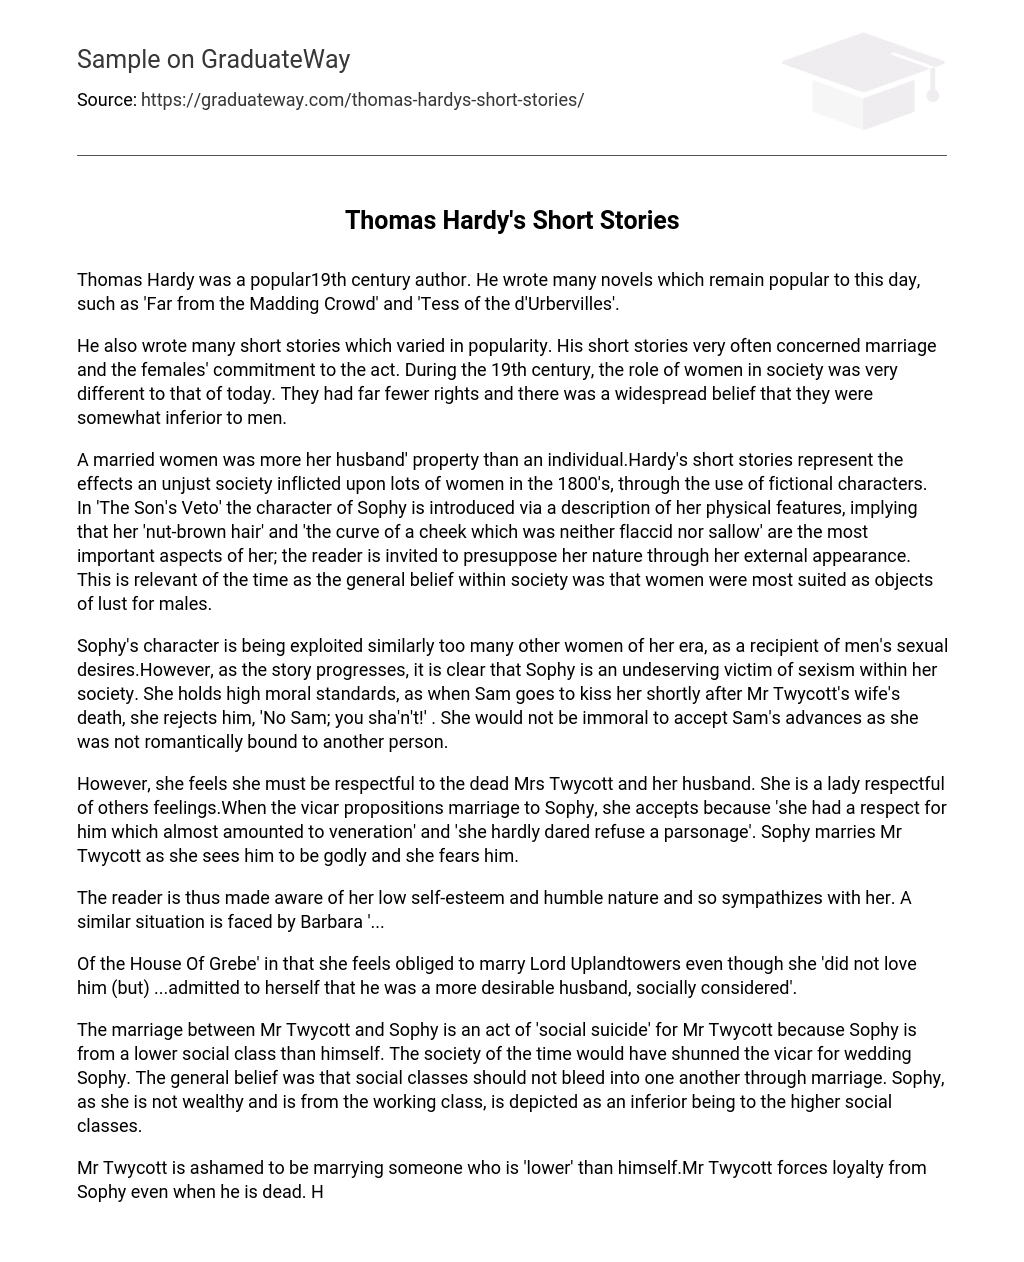 Thomas Hardy’s Short Stories Analysis